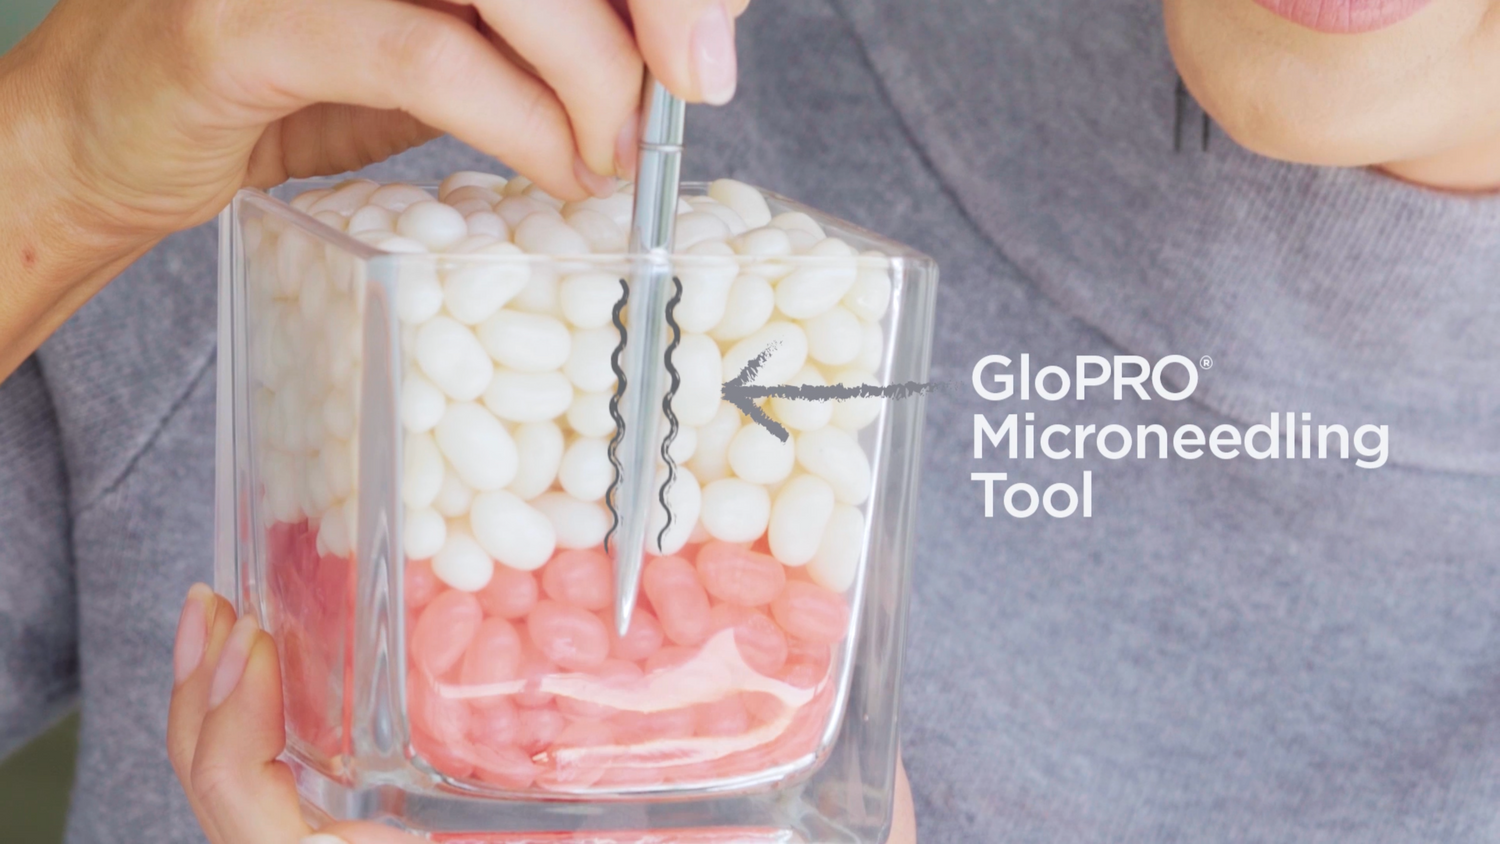 BeautyBio: Microneedling Explained